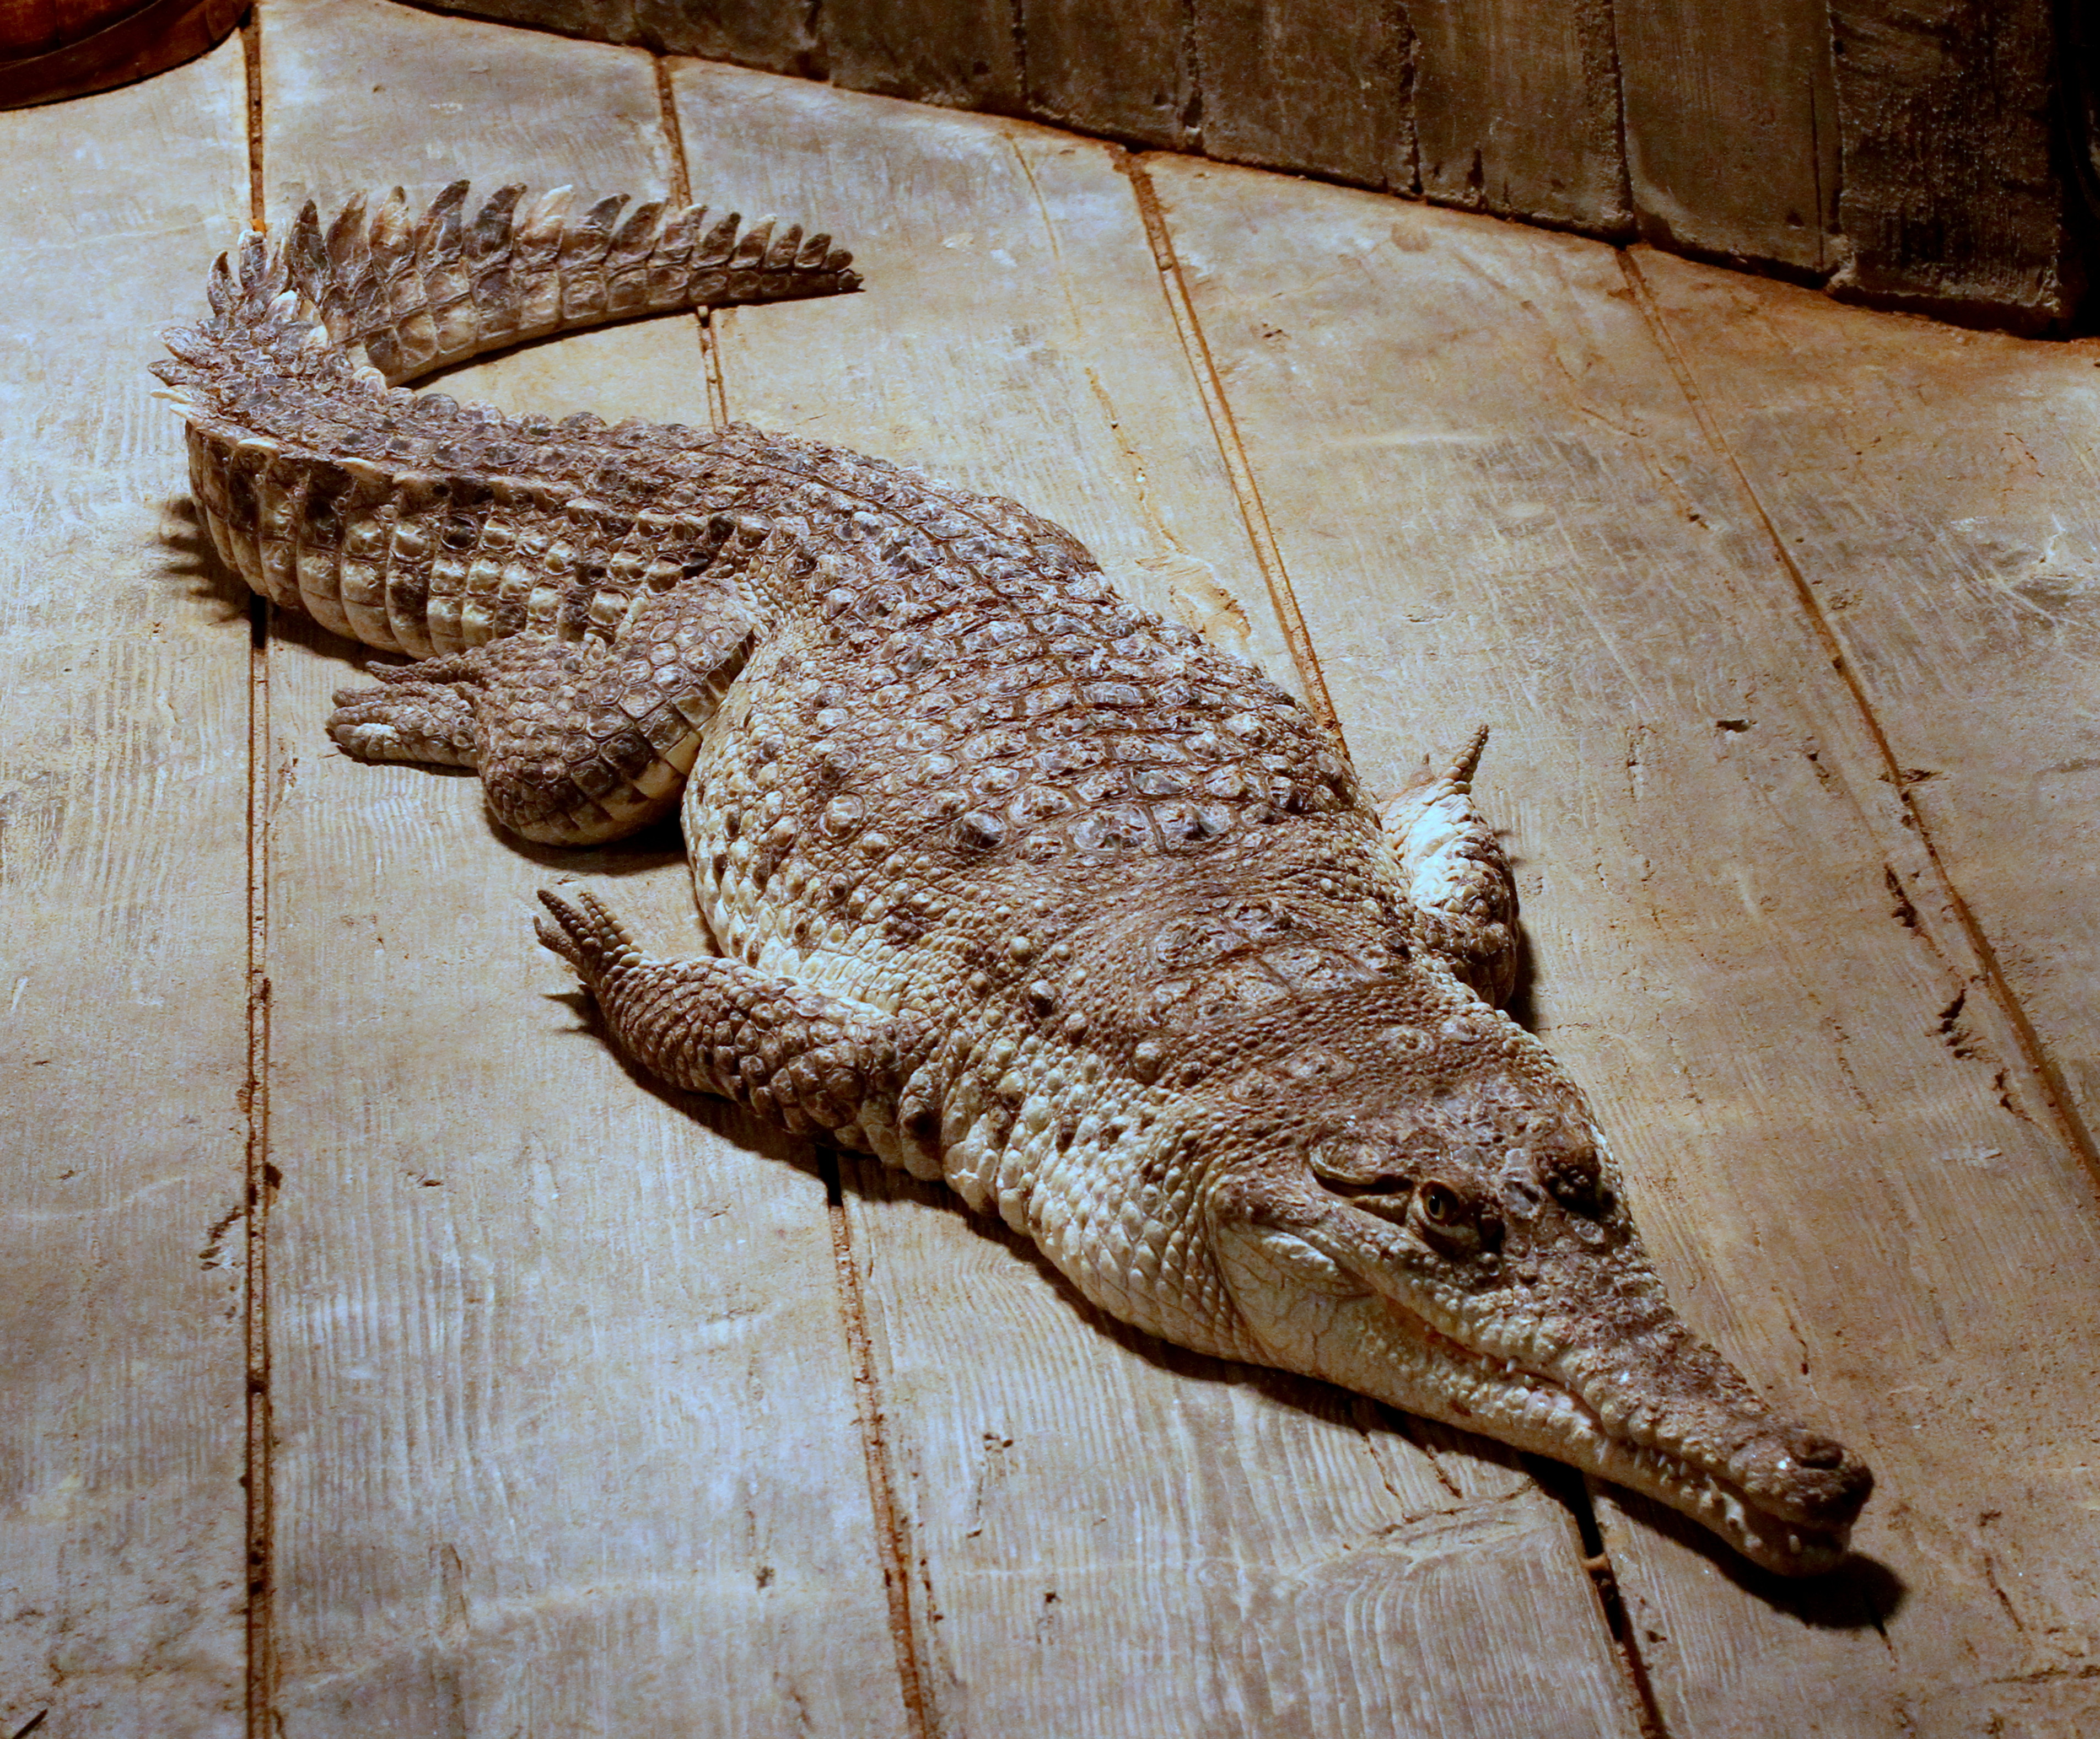 Orinoco crocodile - Wikipedia